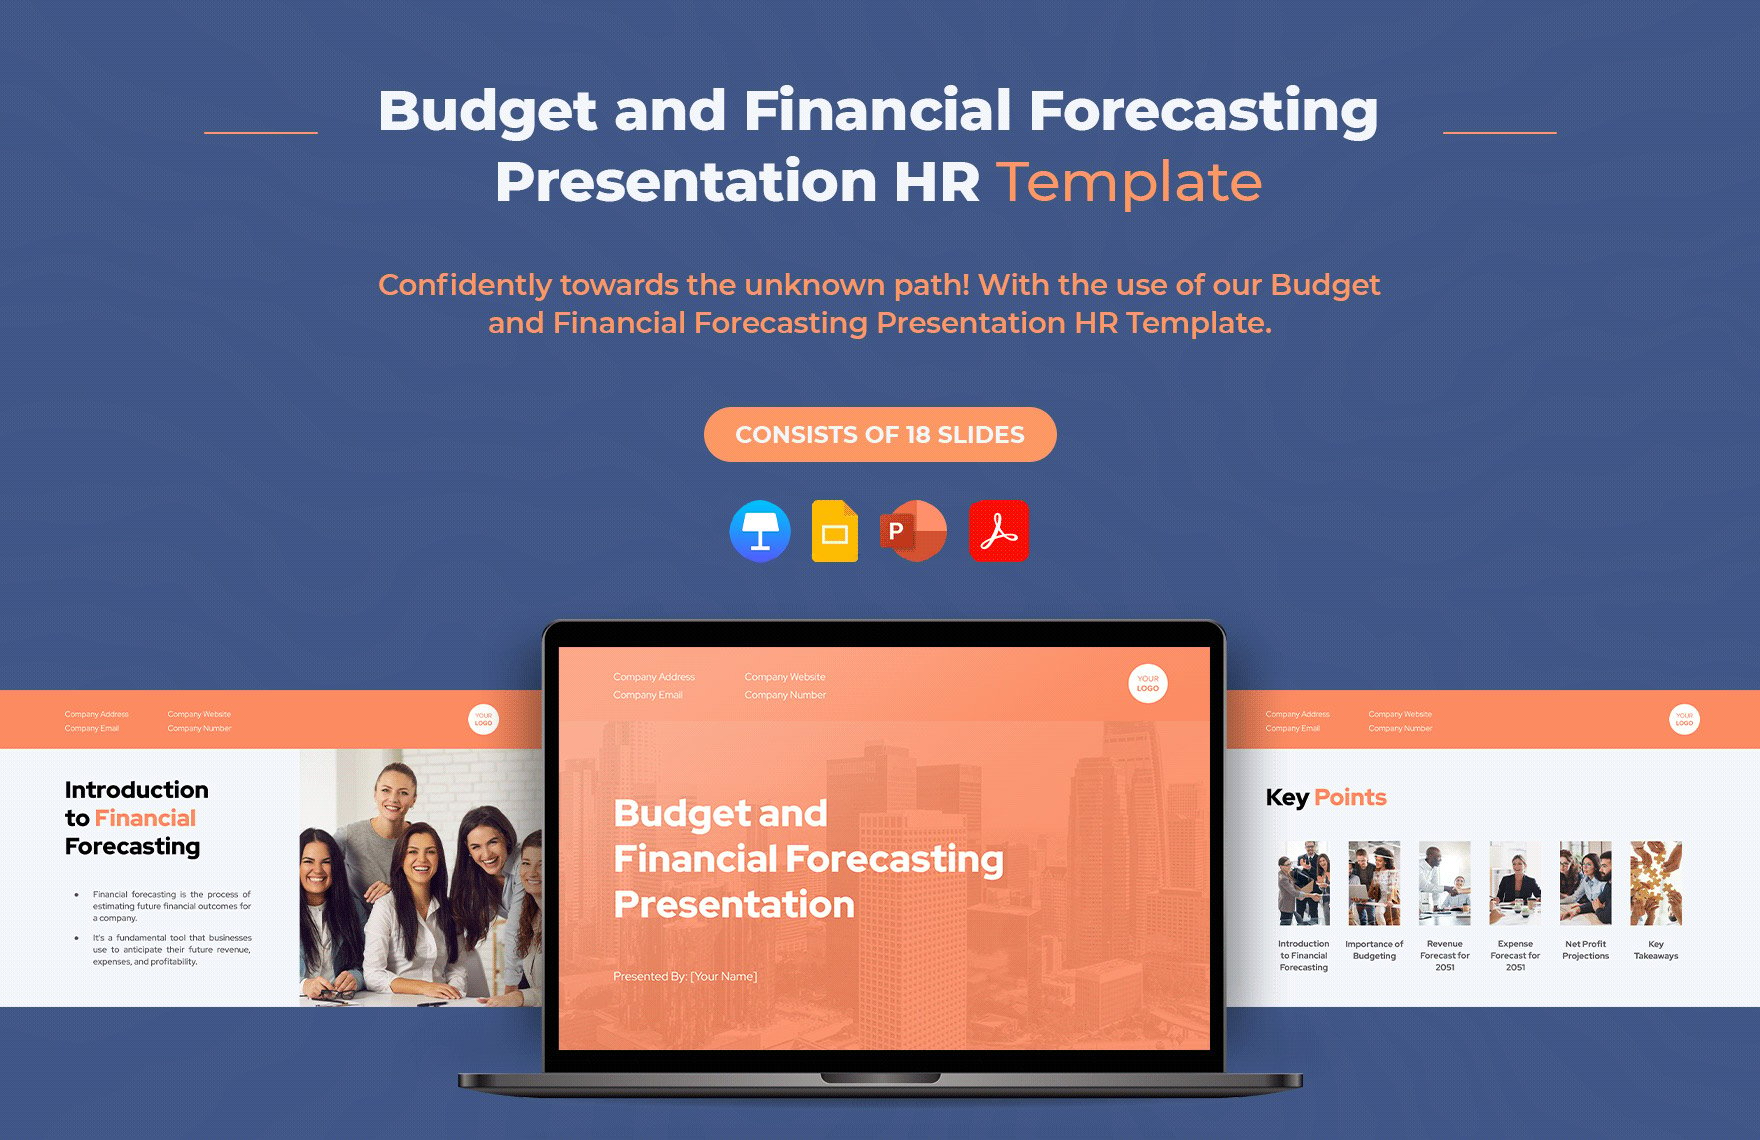 Budget and Financial Forecasting Presentation HR Template